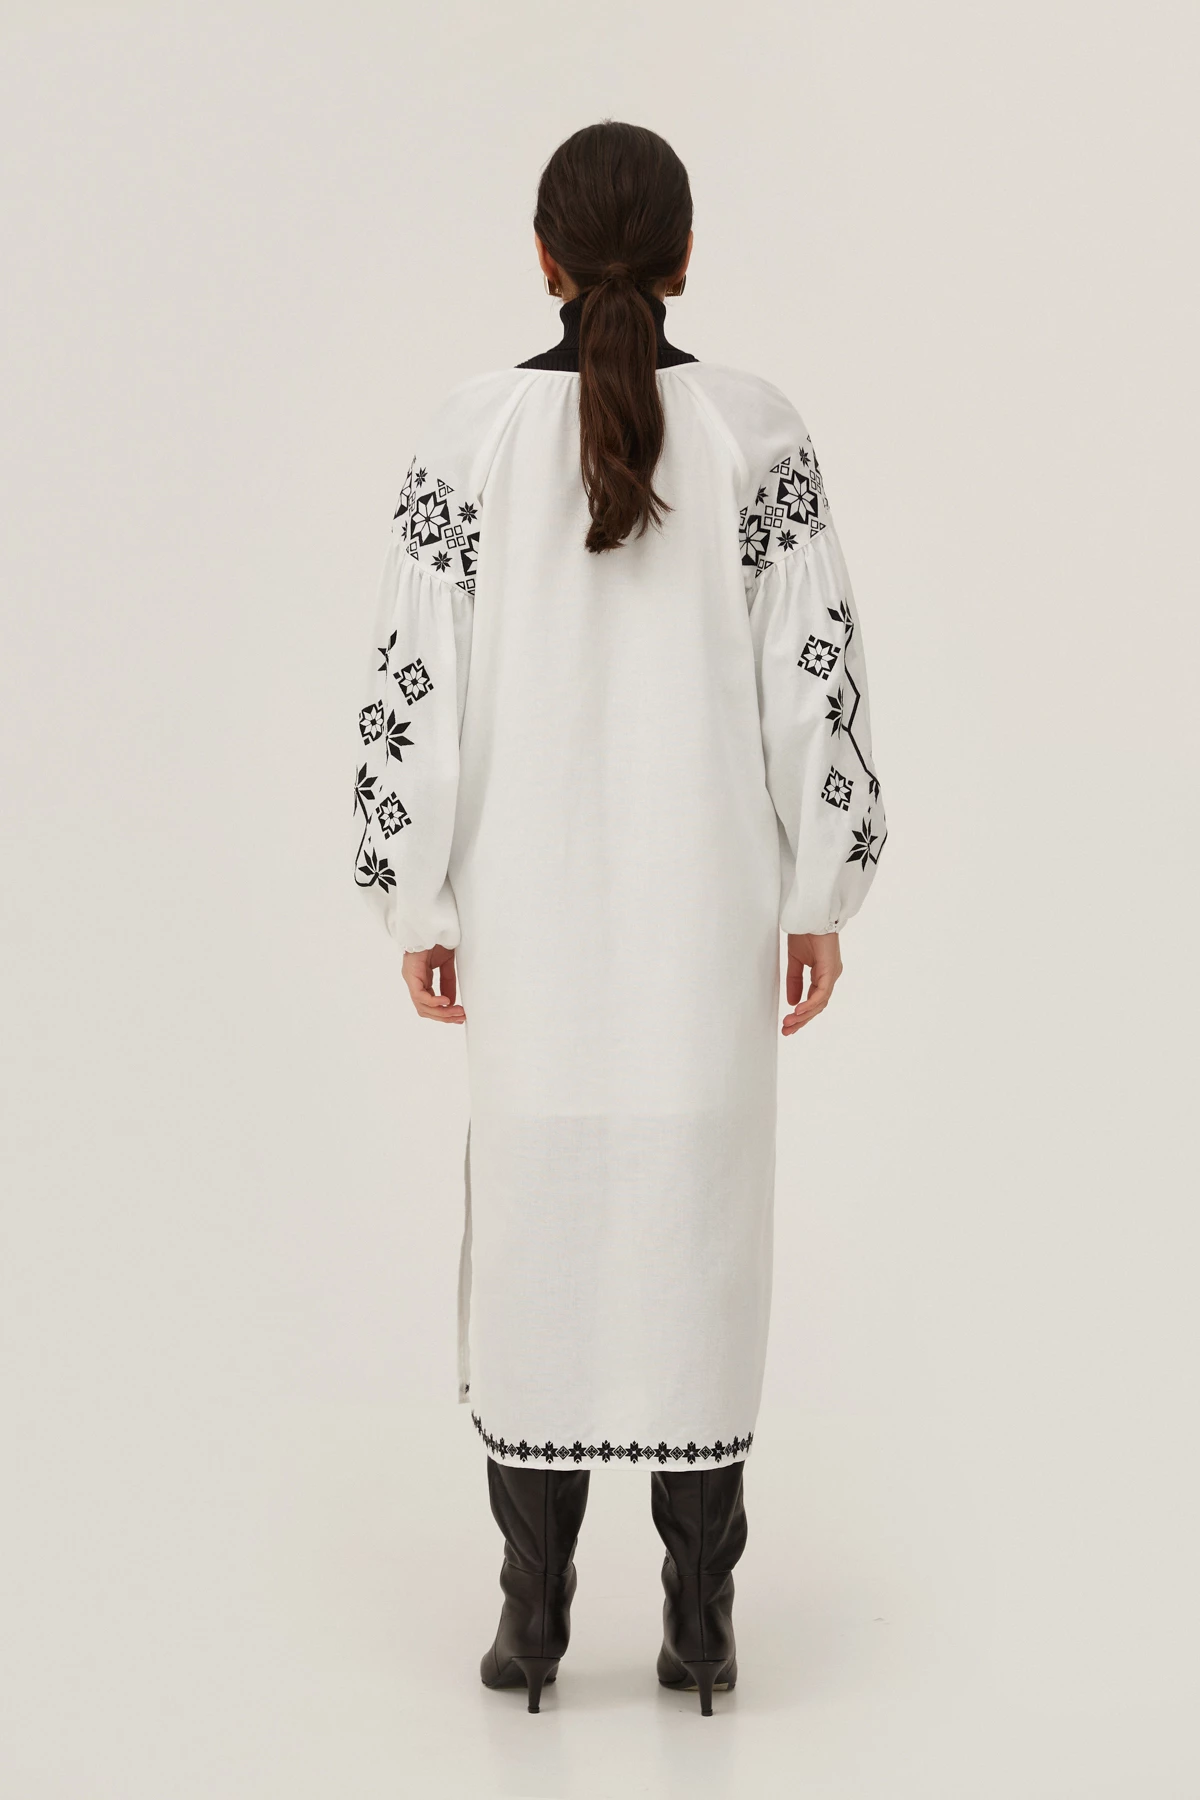 Milky linen vyshyvanka dress with Virgin Mary star embroidery, photo 9